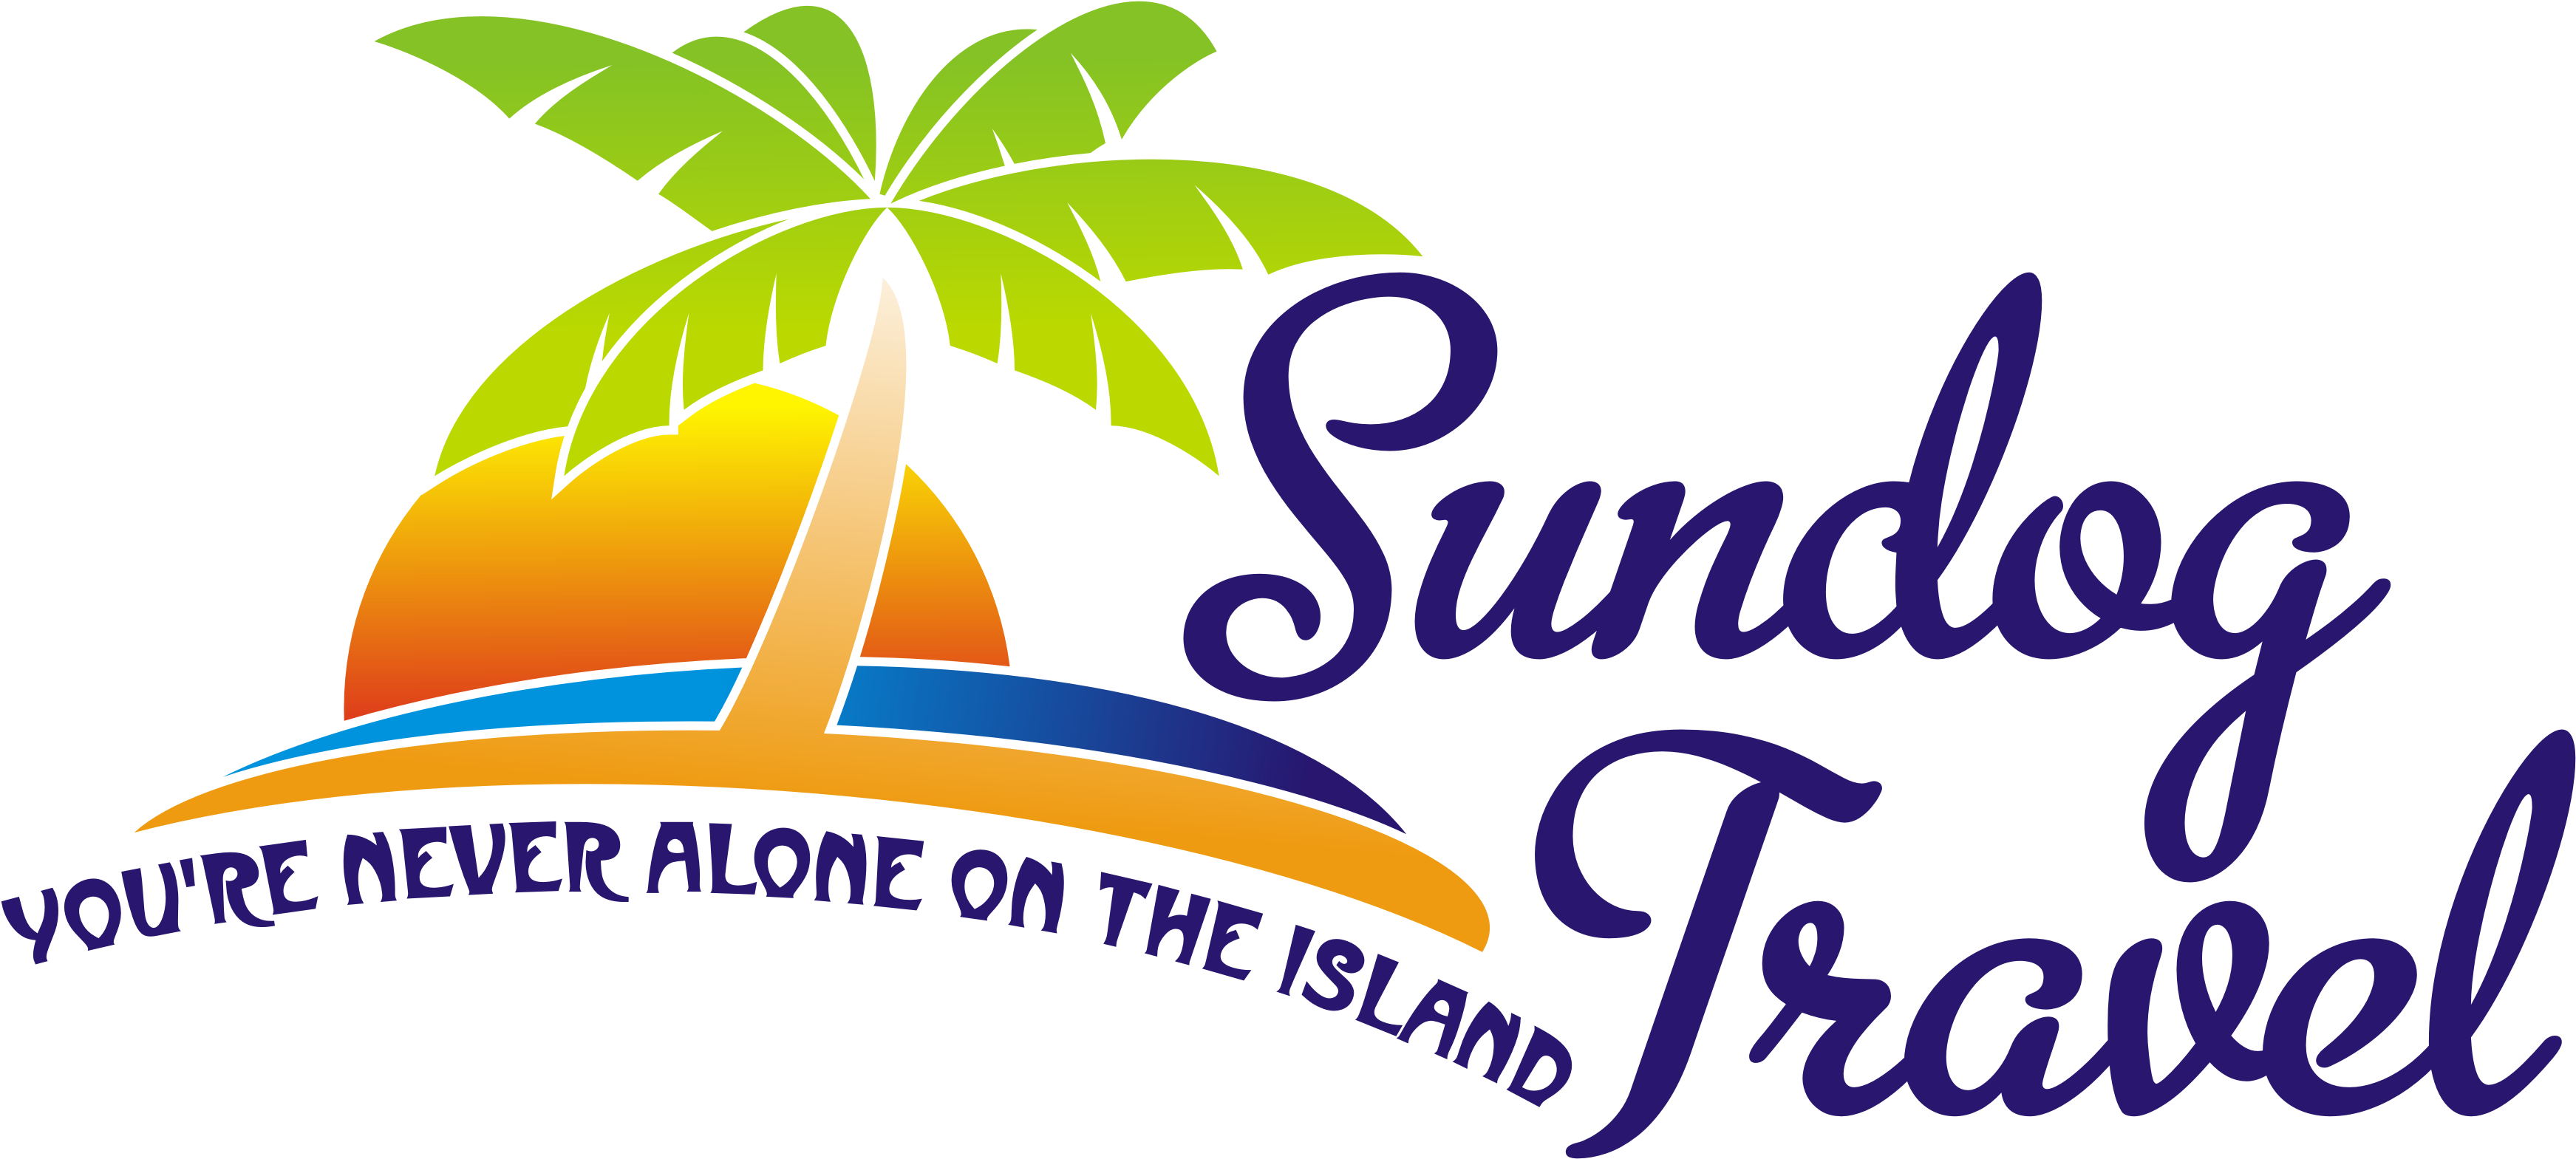 Sundog Vacations - Bali (3519x1602)